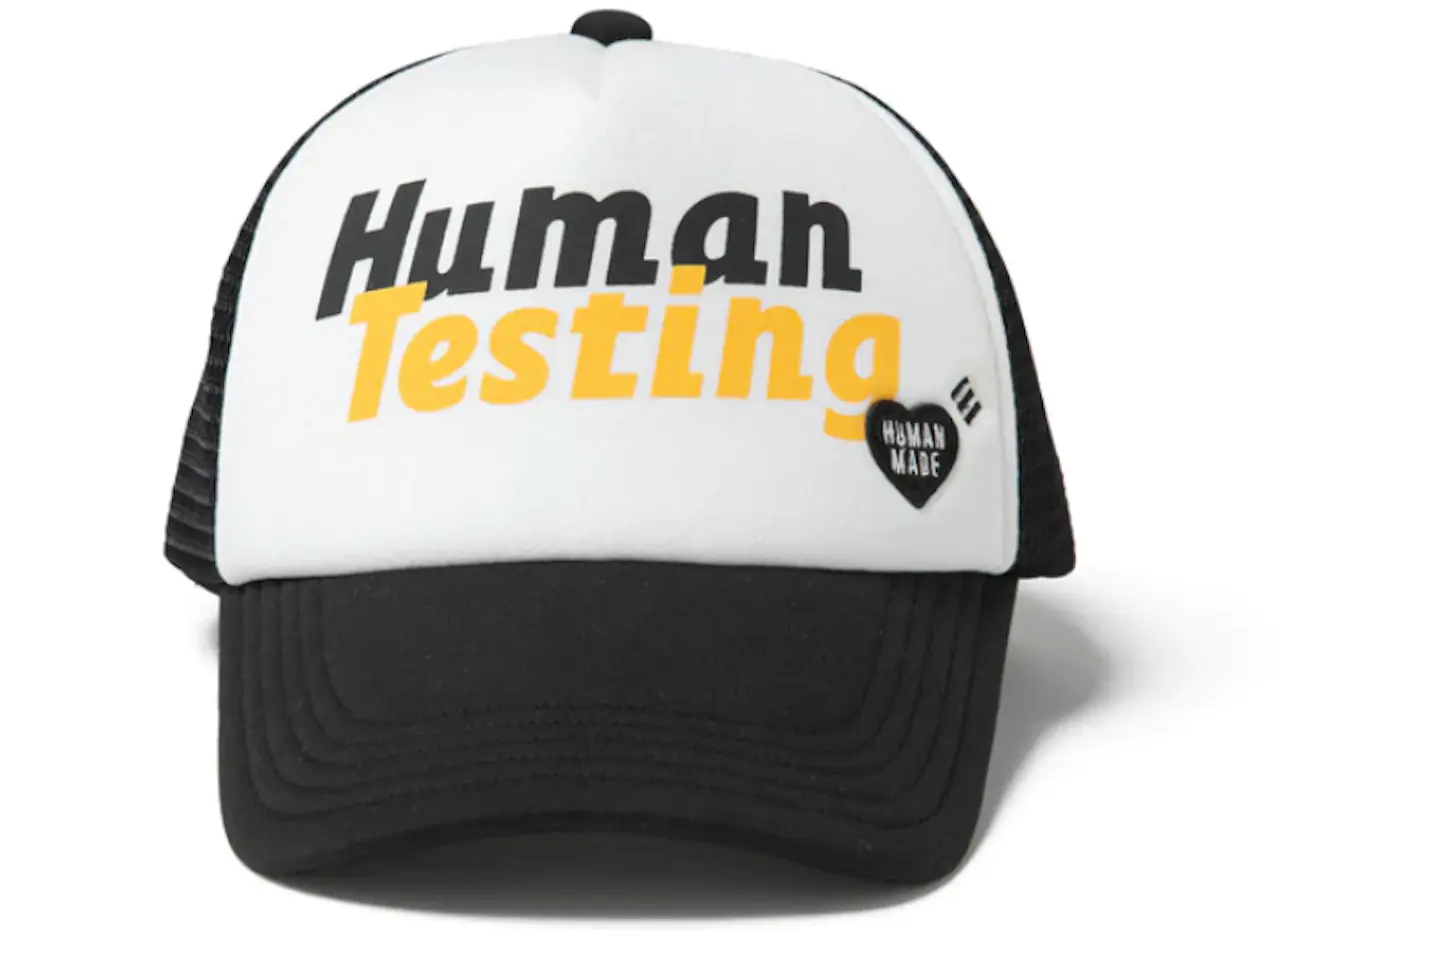 Human Made x Asap Rocky Human Testing Mesh Cap Black White - SS22 - US